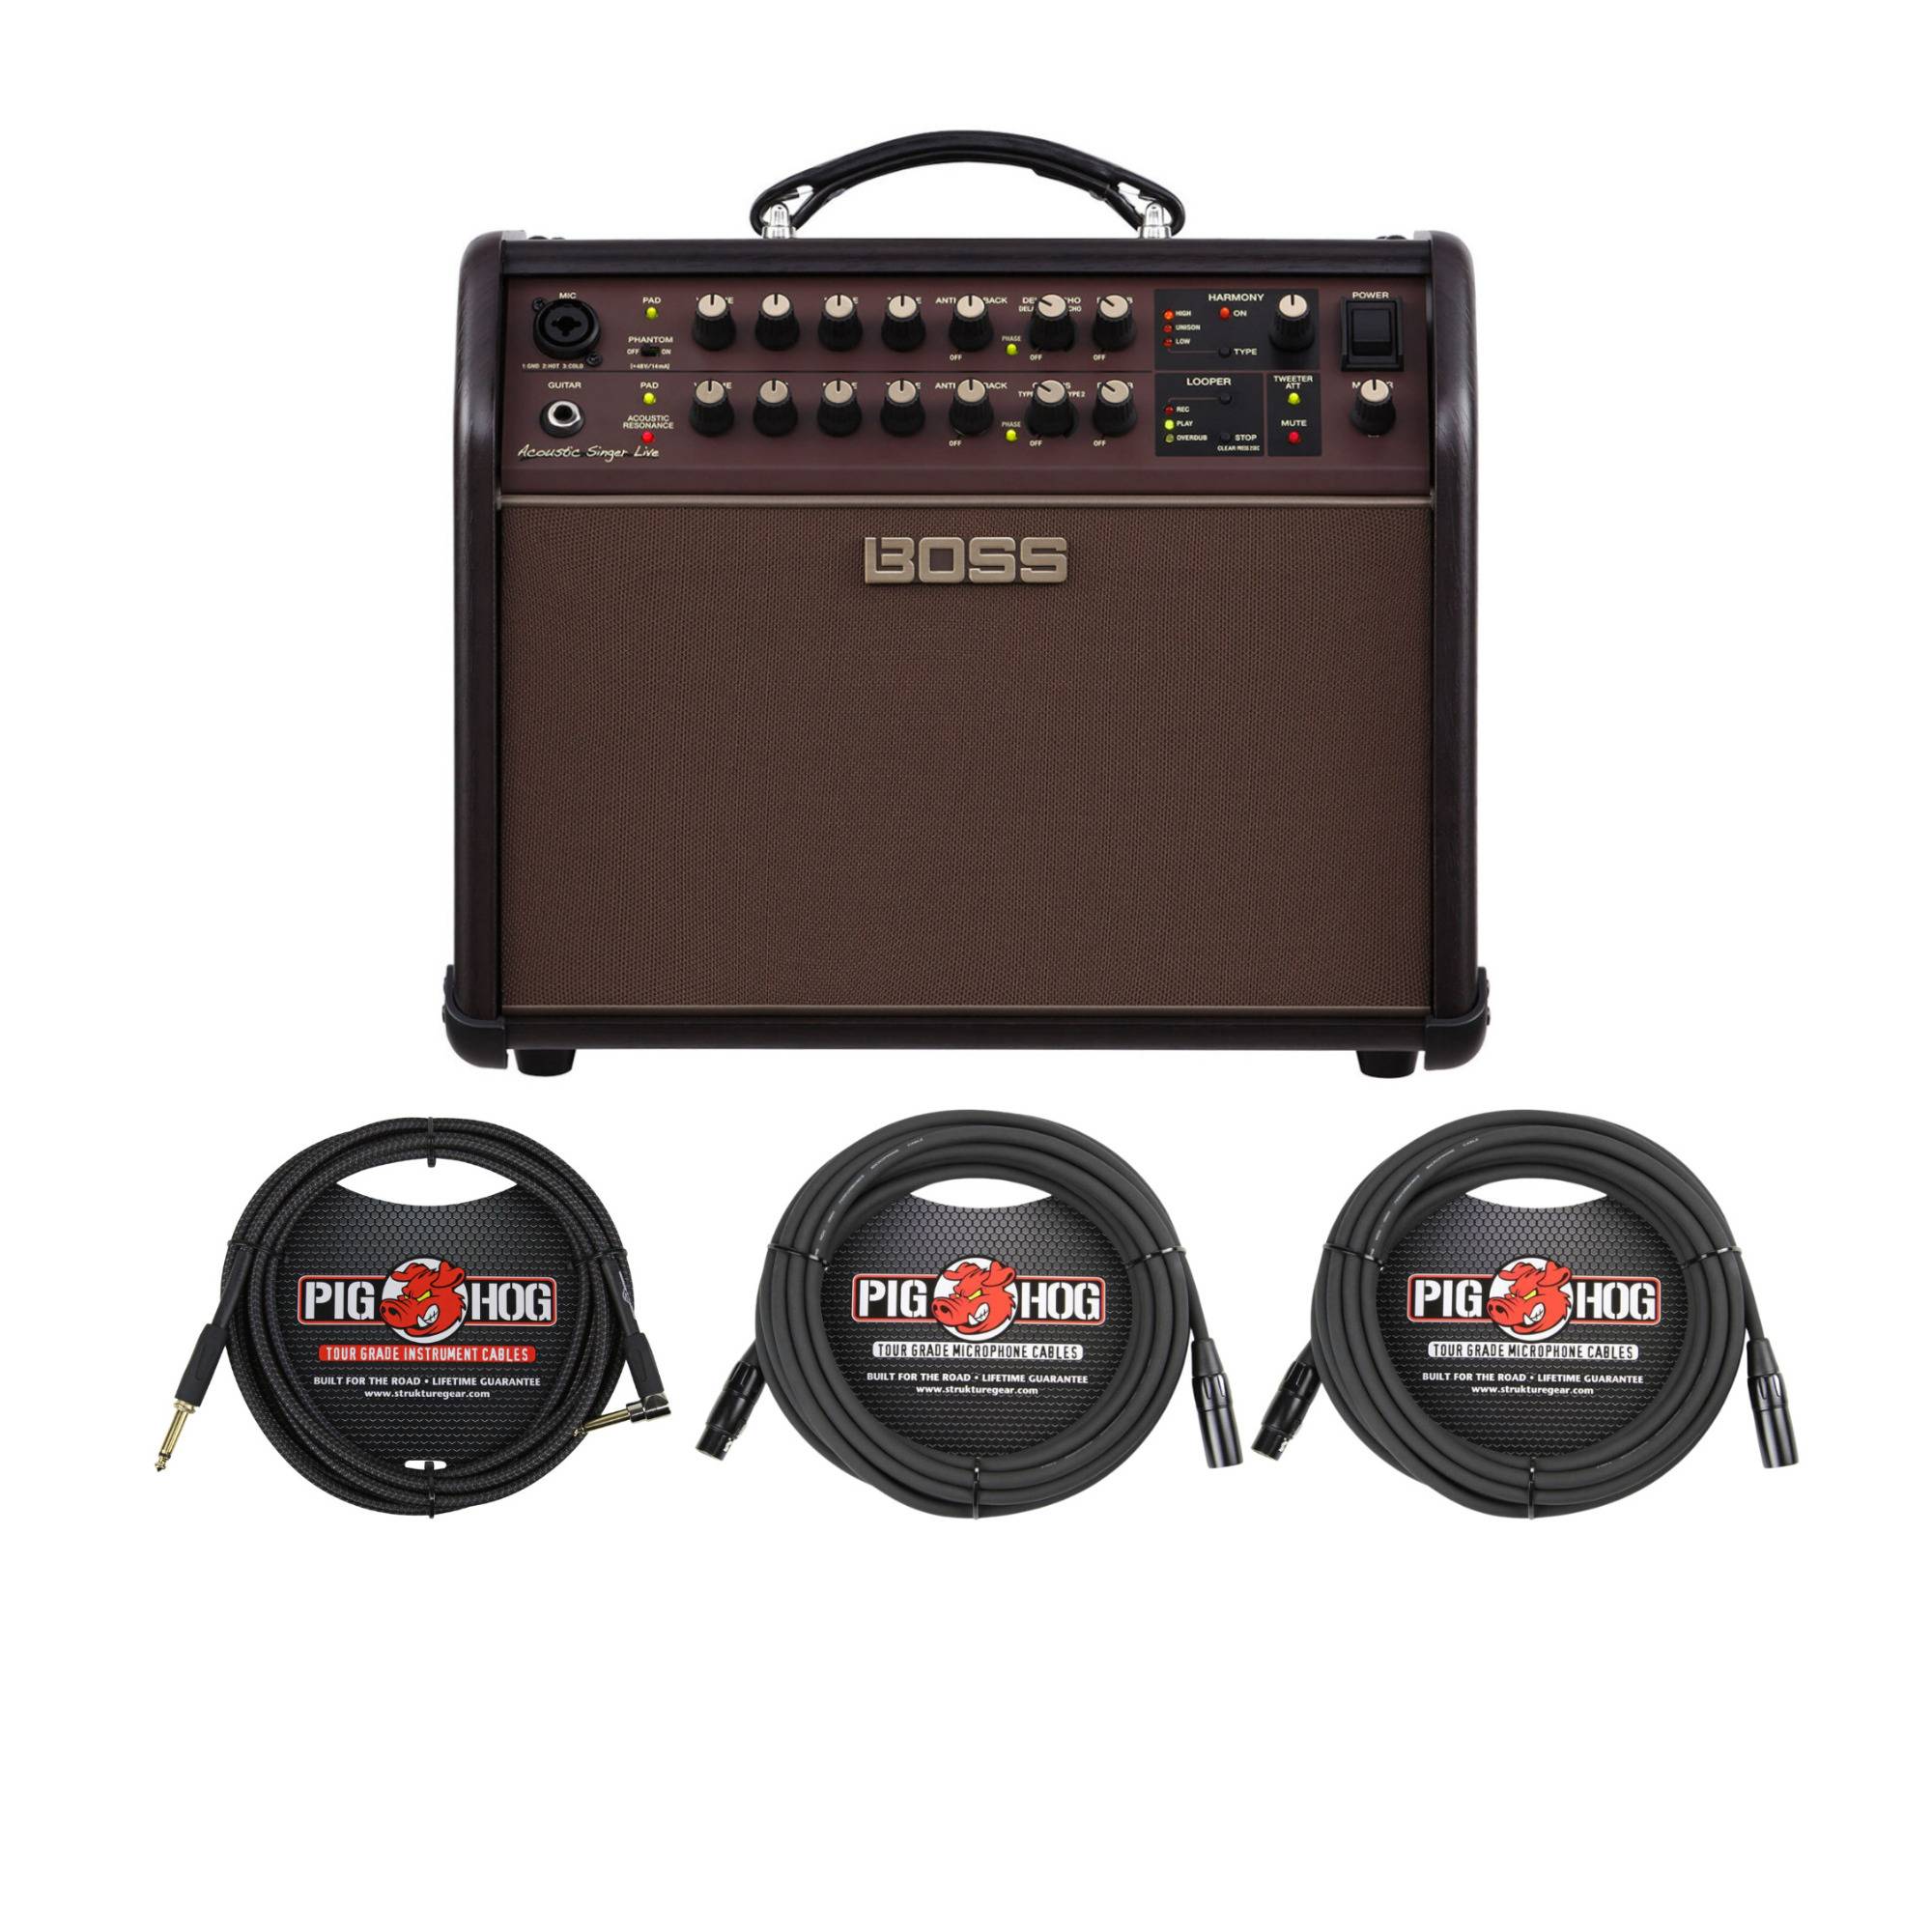 BOSS Acoustic Singer Live 60-Watt Bi-Amp Amplifier with Guitar Cable and XLR Cables Bundle